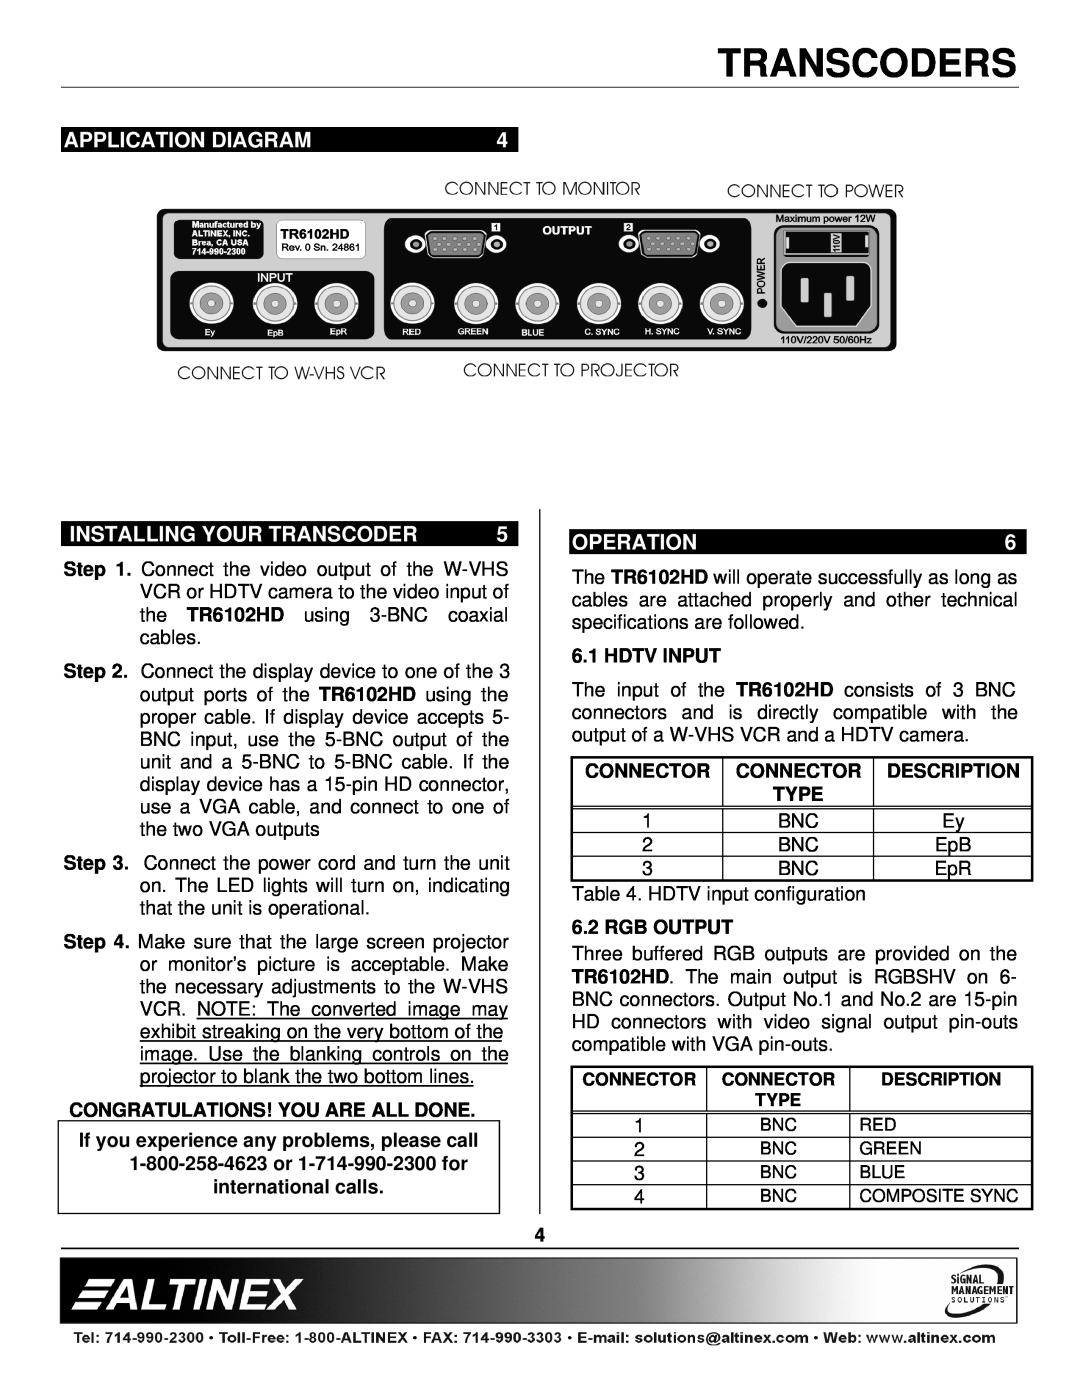 Altinex TR6102HD manual Application Diagram, Installing Your Transcoder, Operation, Hdtv Input, Connector, Description 